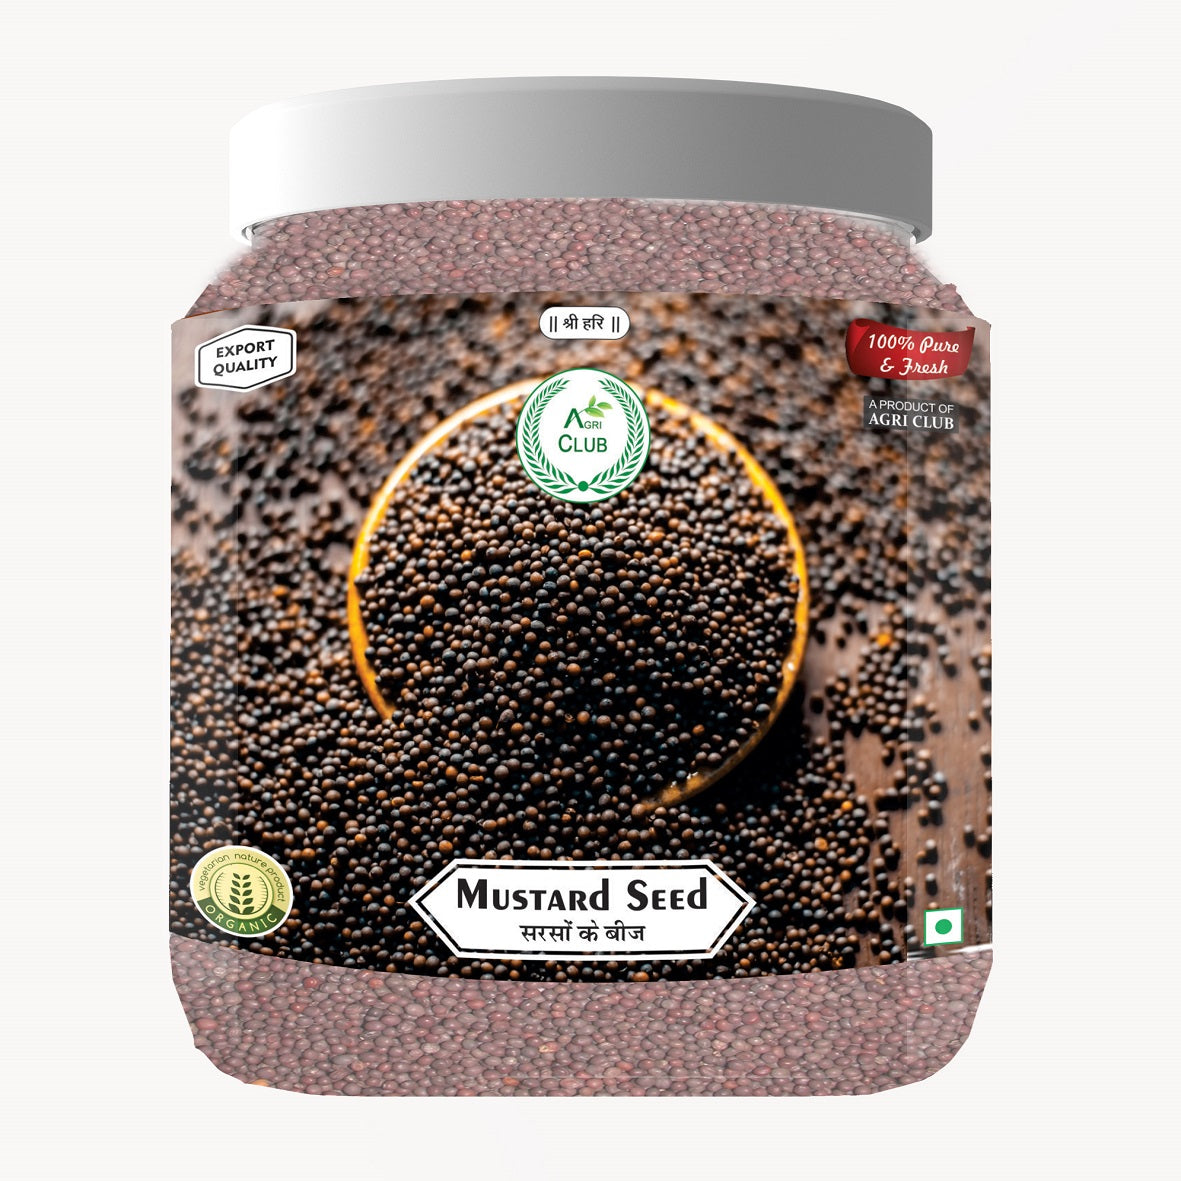 Mustard Seed 100% Premium Quality